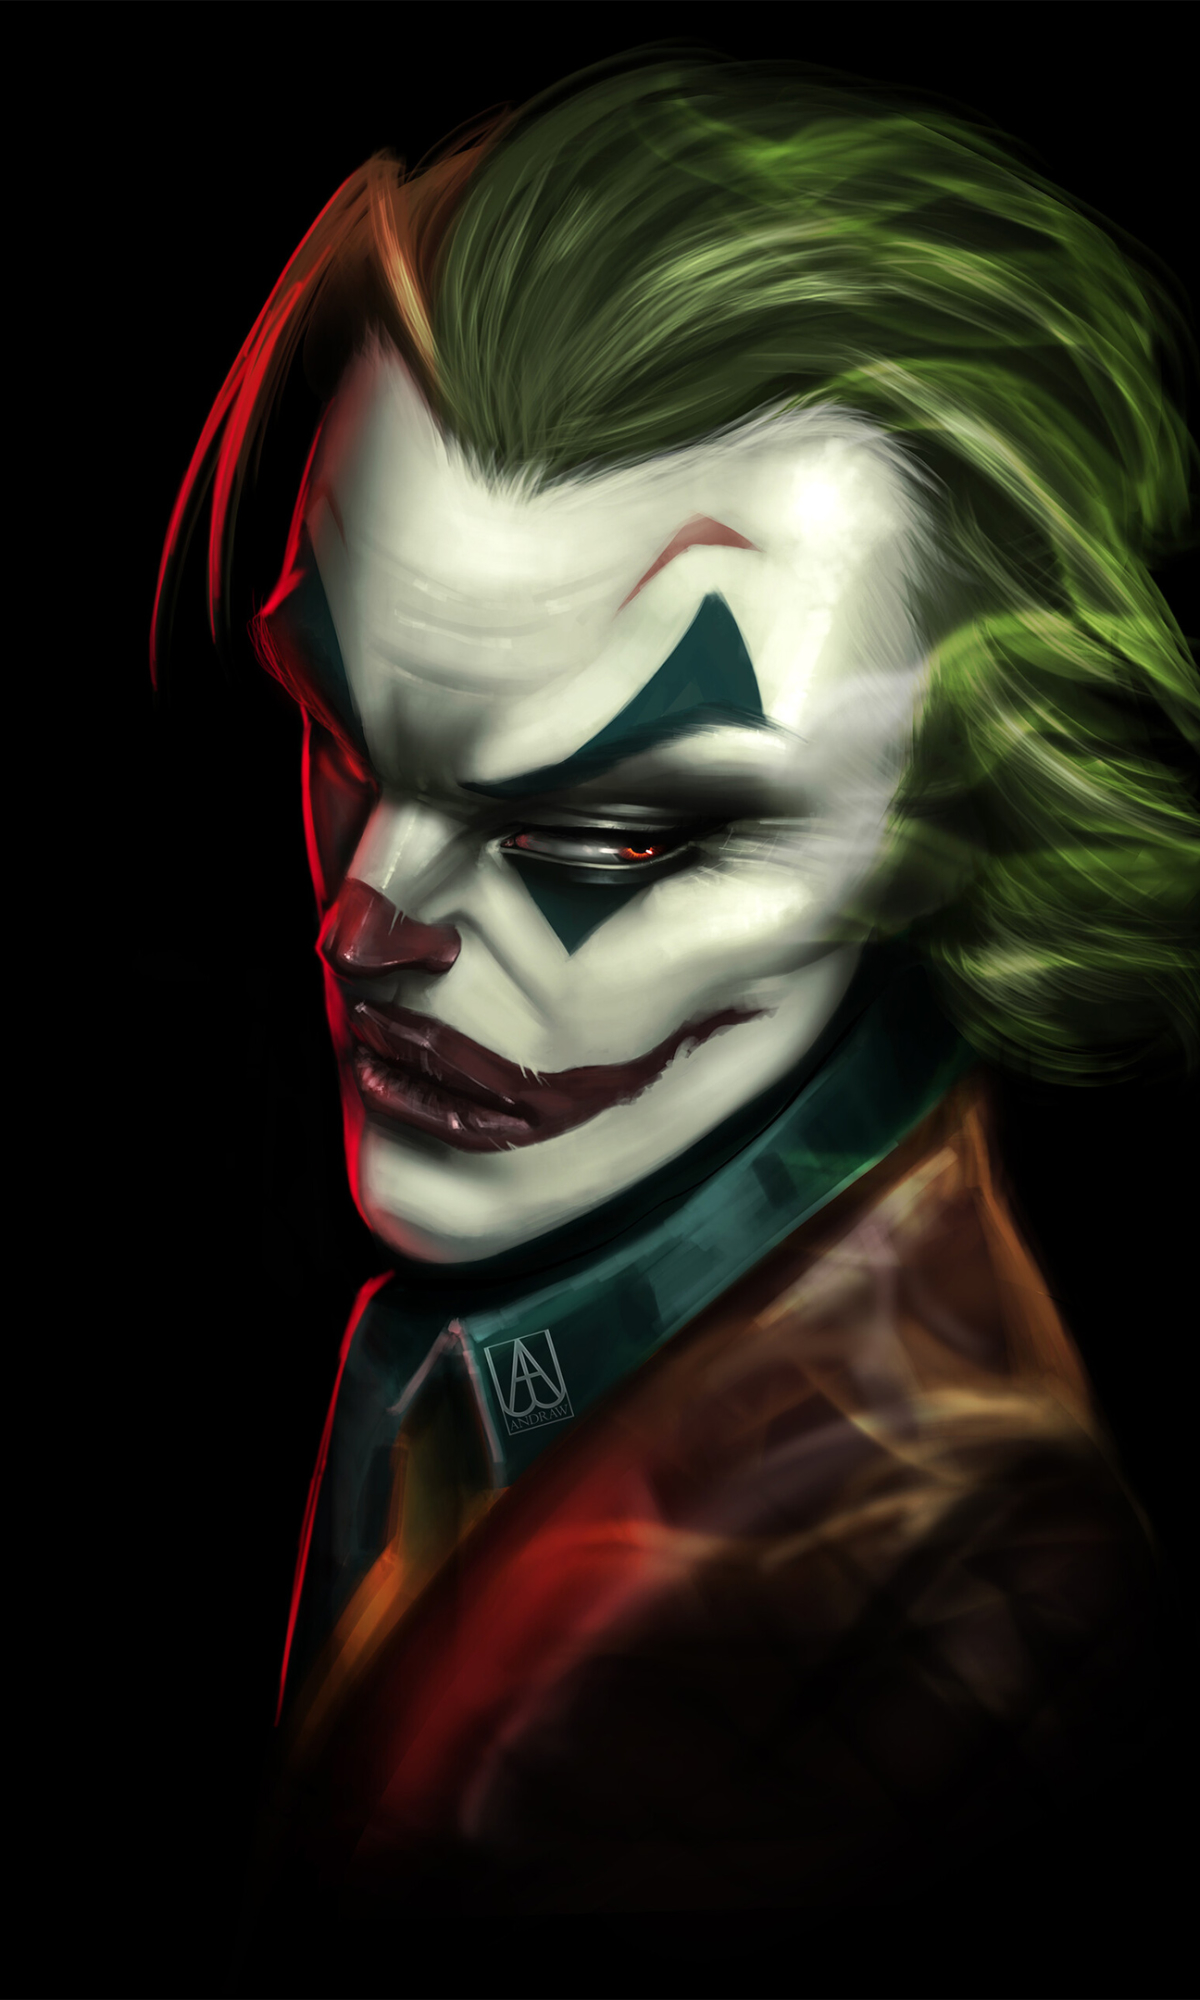 Joker Comic Wallpaper Hd : Wallpapers13.com